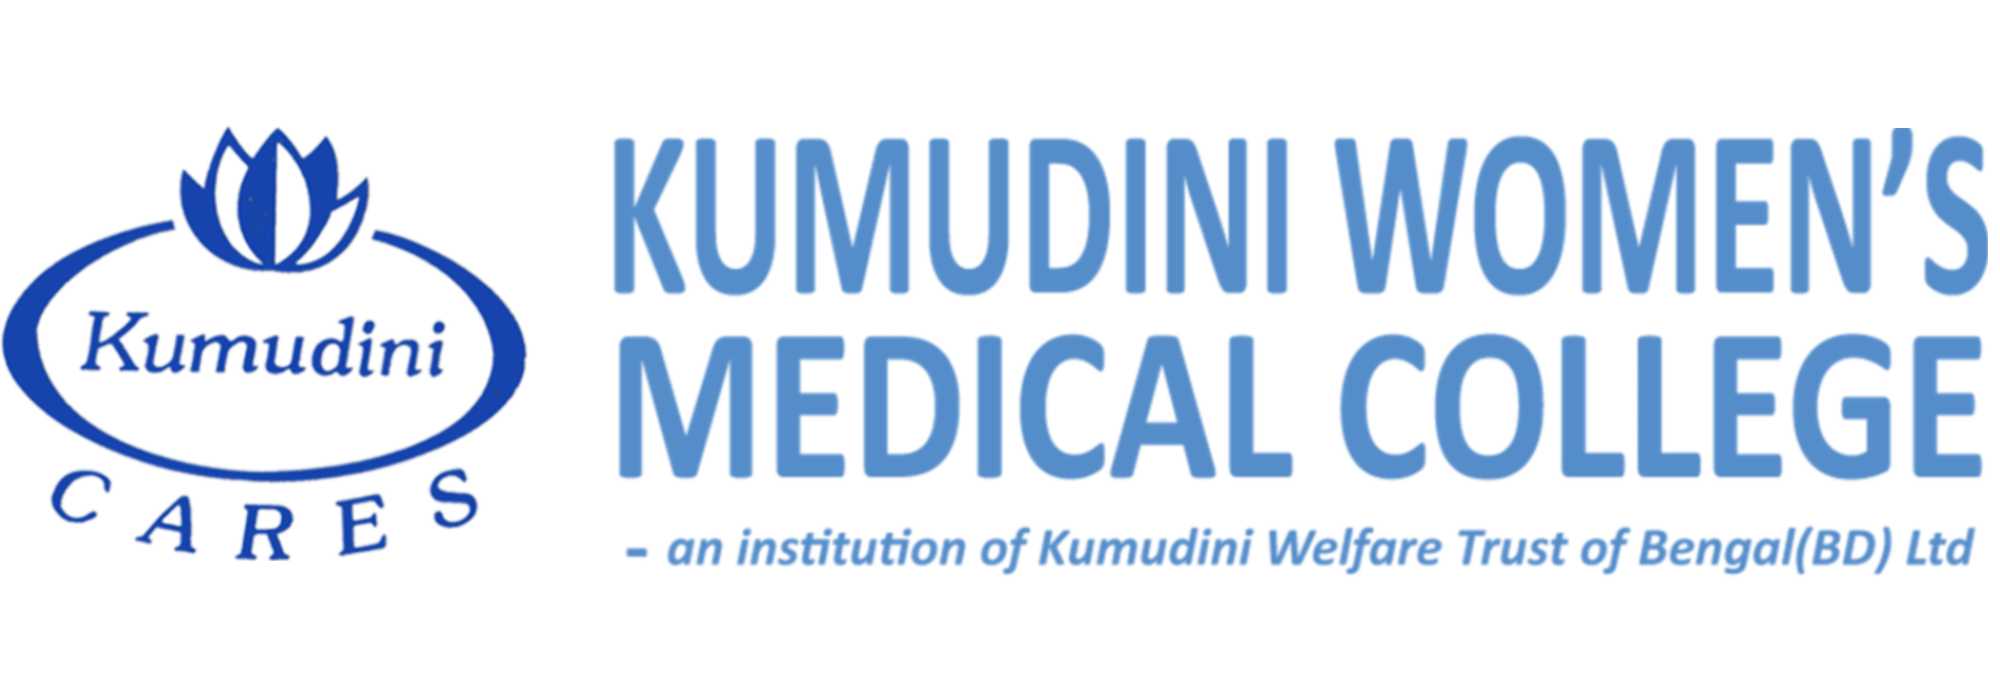 Kumudini Women Medical College-logo